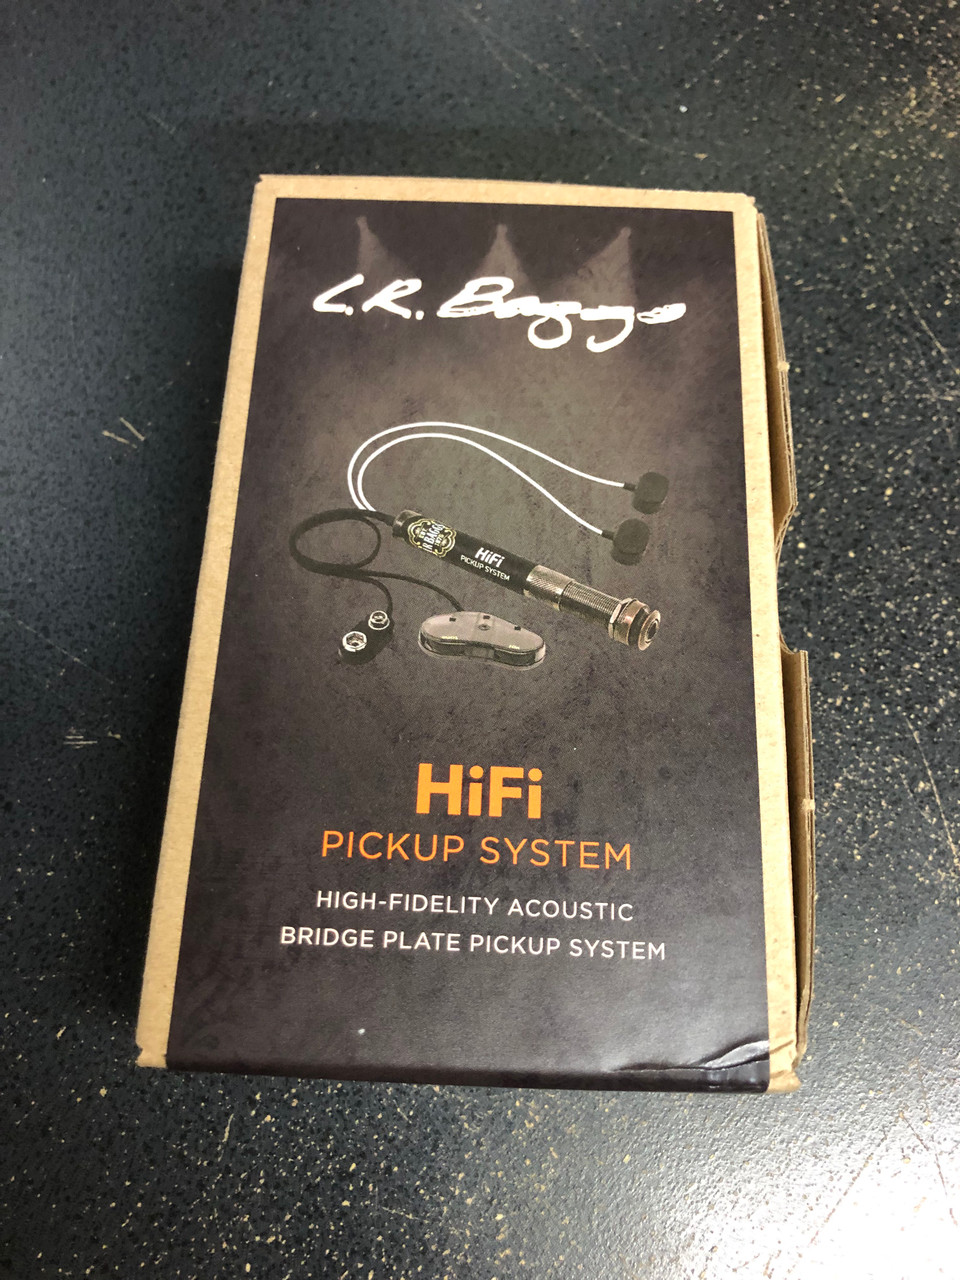 HiFi High-Fidelity Acoustic Bridge Plate Pickup System — LR Baggs